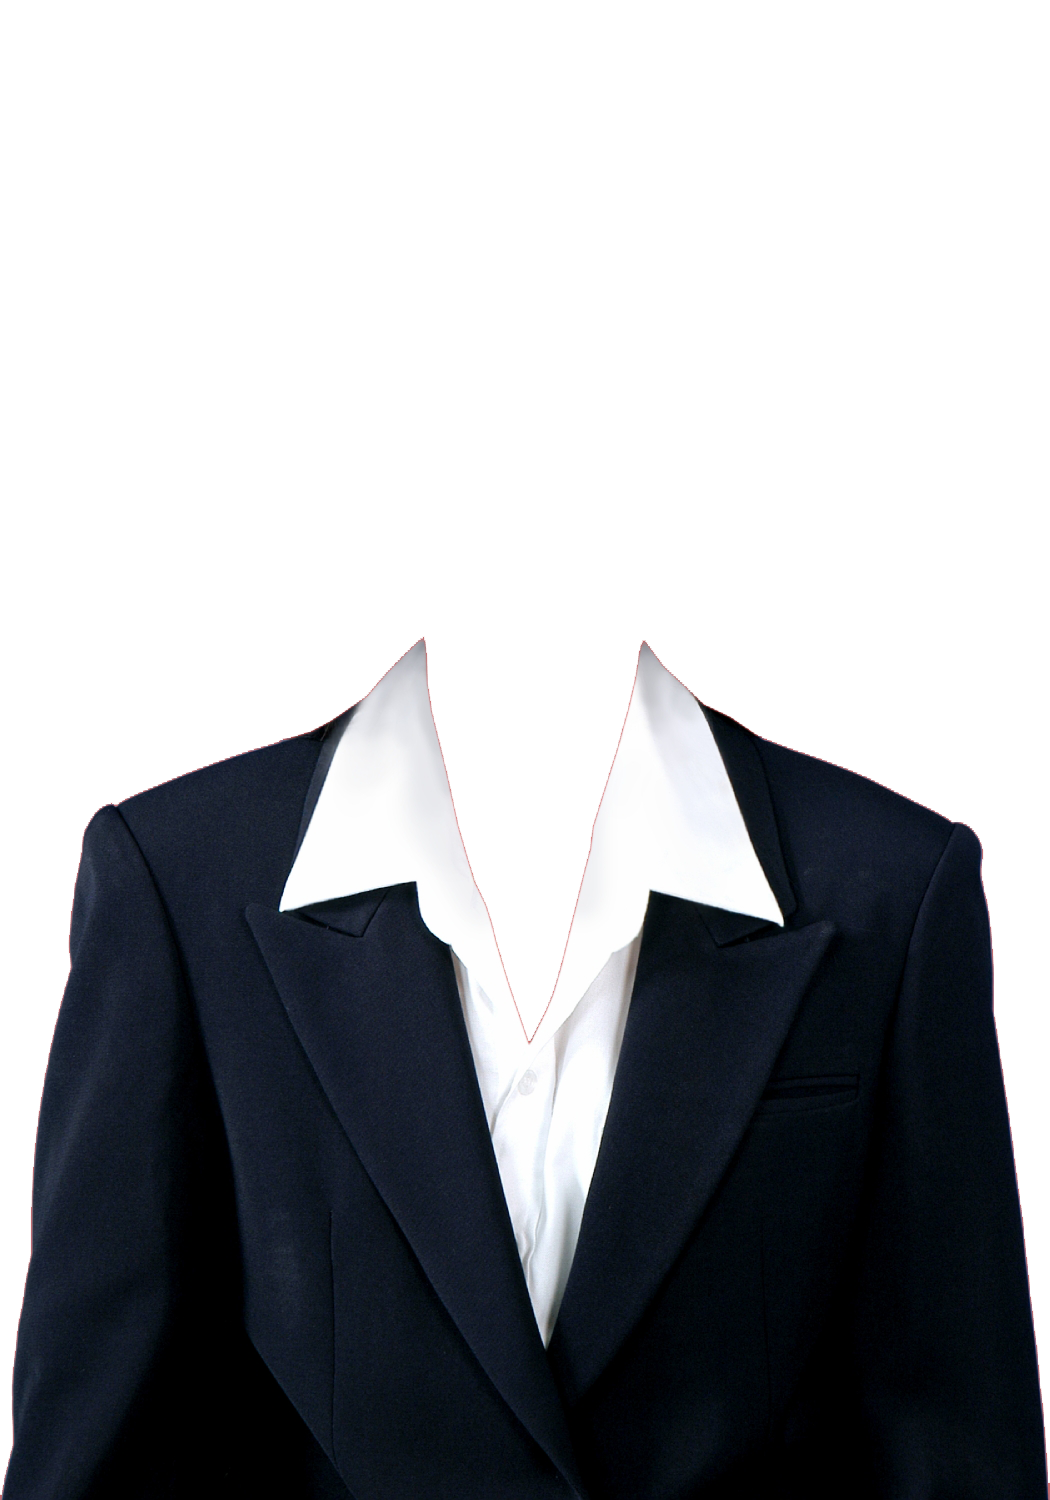 Suit Woman Formal wear - dress shirt png download - 1050*1500 - Free ...